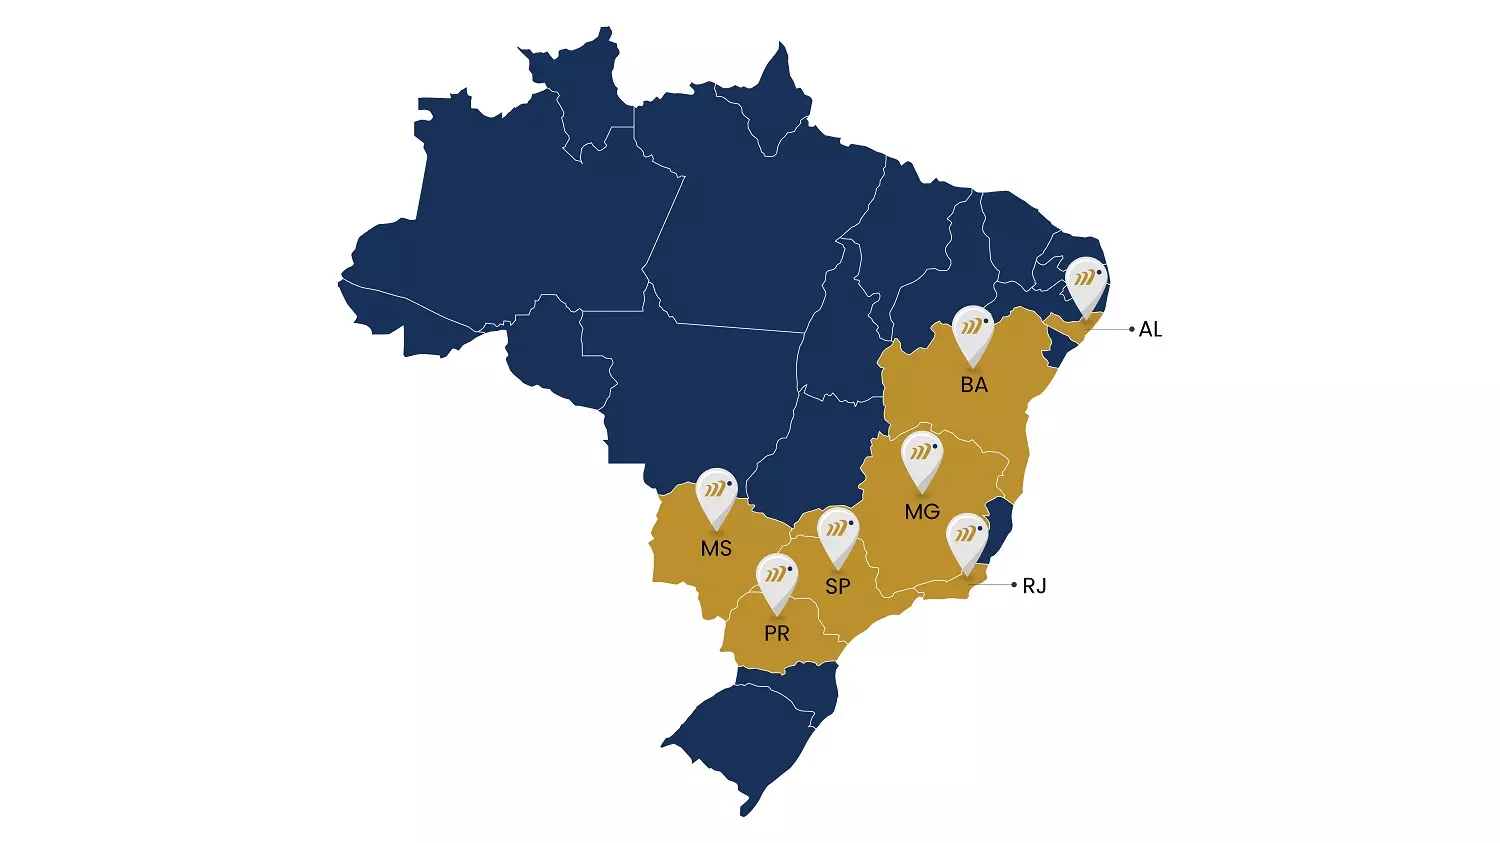 mapa do brasil com localiades da masterPlan